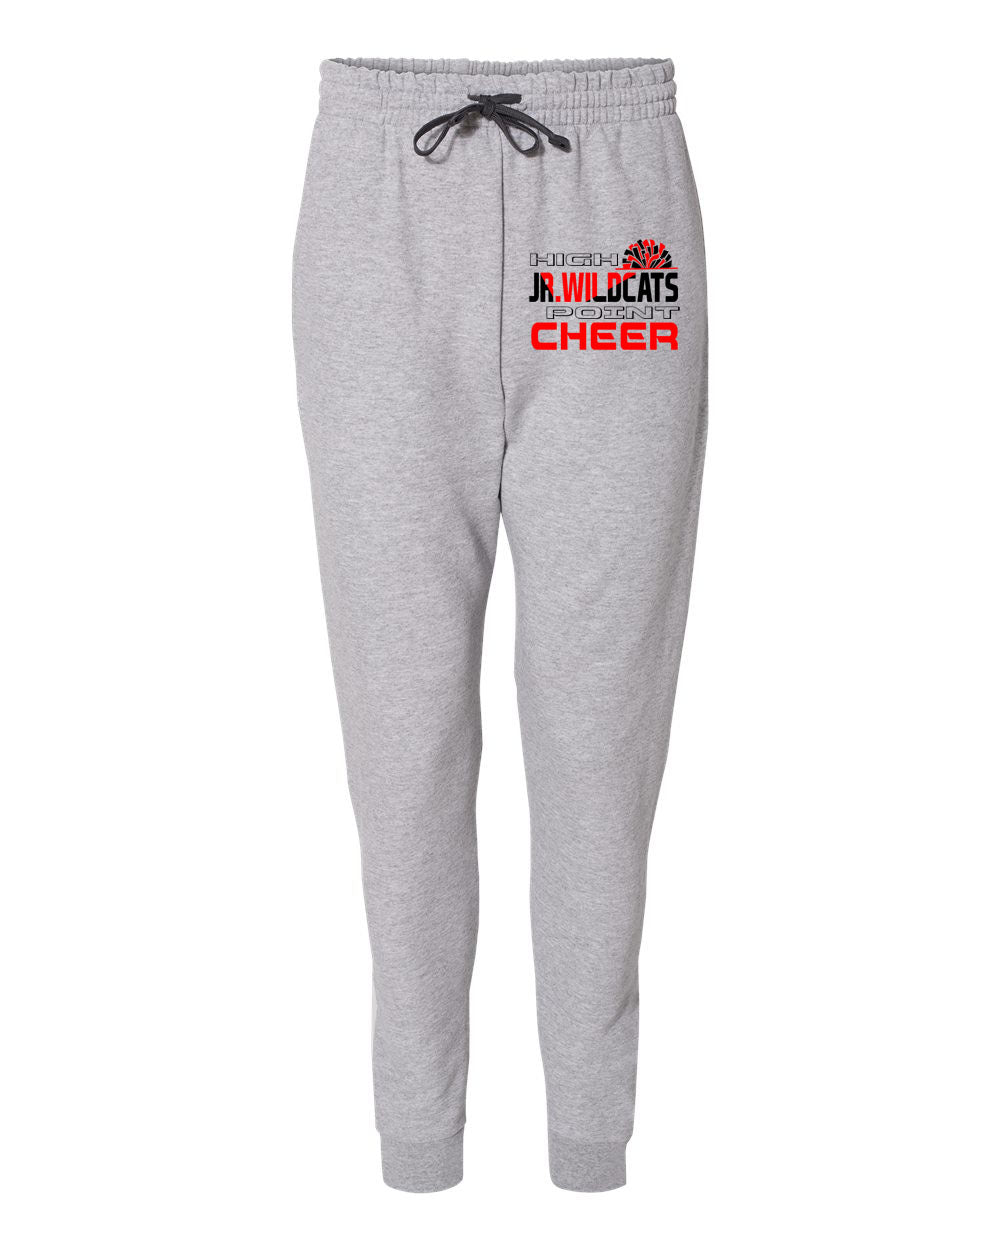 High Point Cheer Design 5 Sweatpants